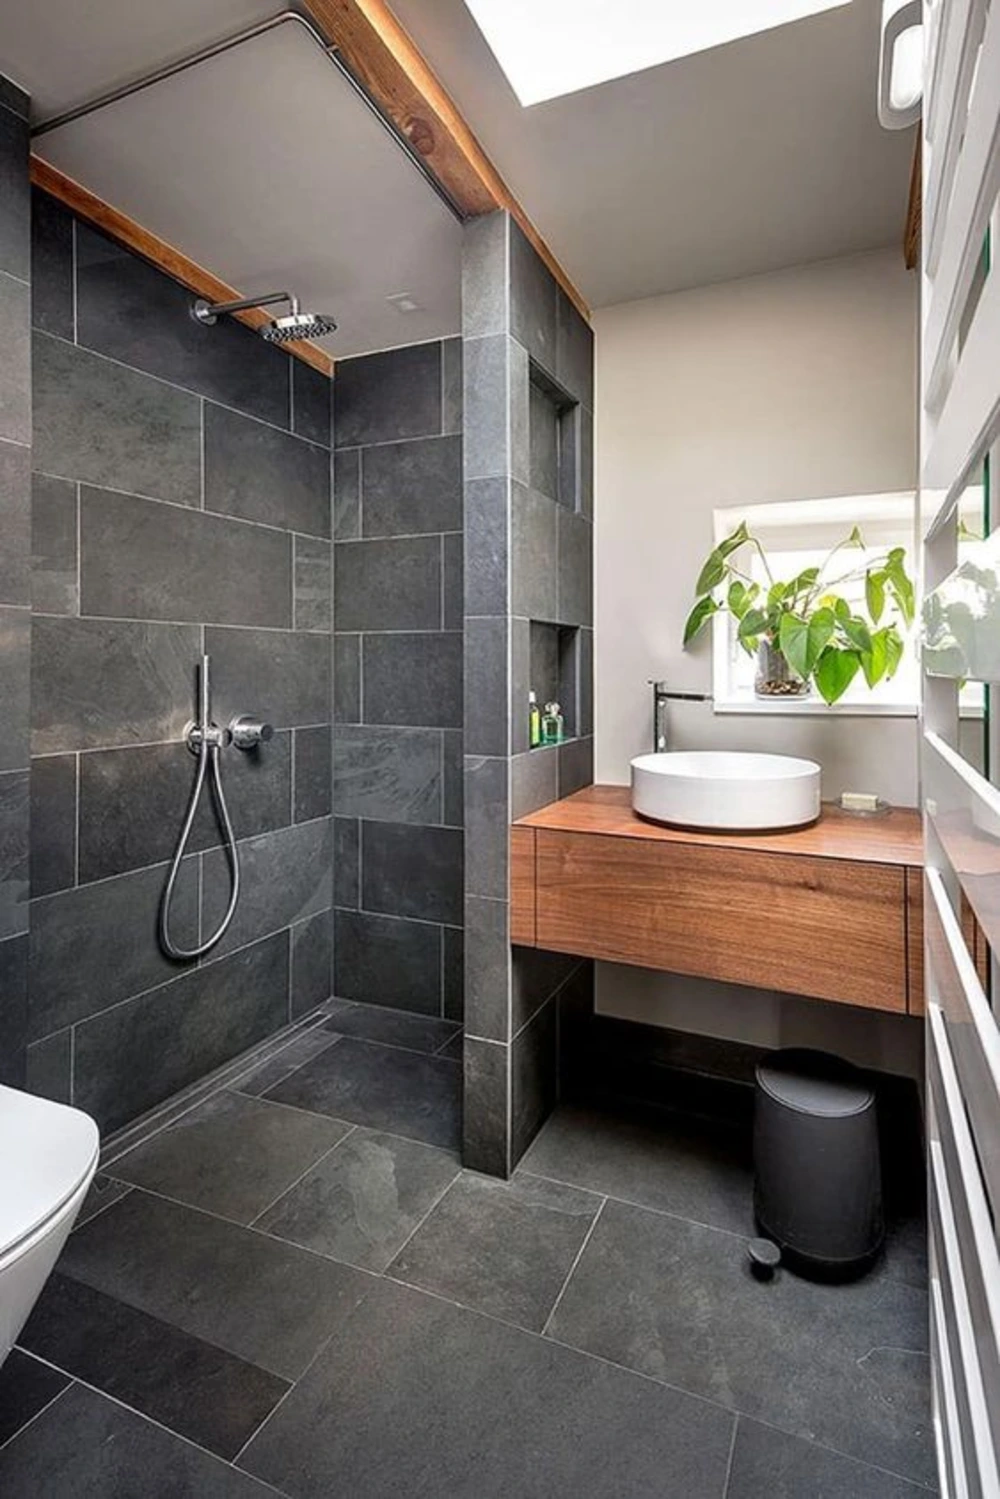 Small Bathroom Ideas: Make Your Bathroom Feel Bigger